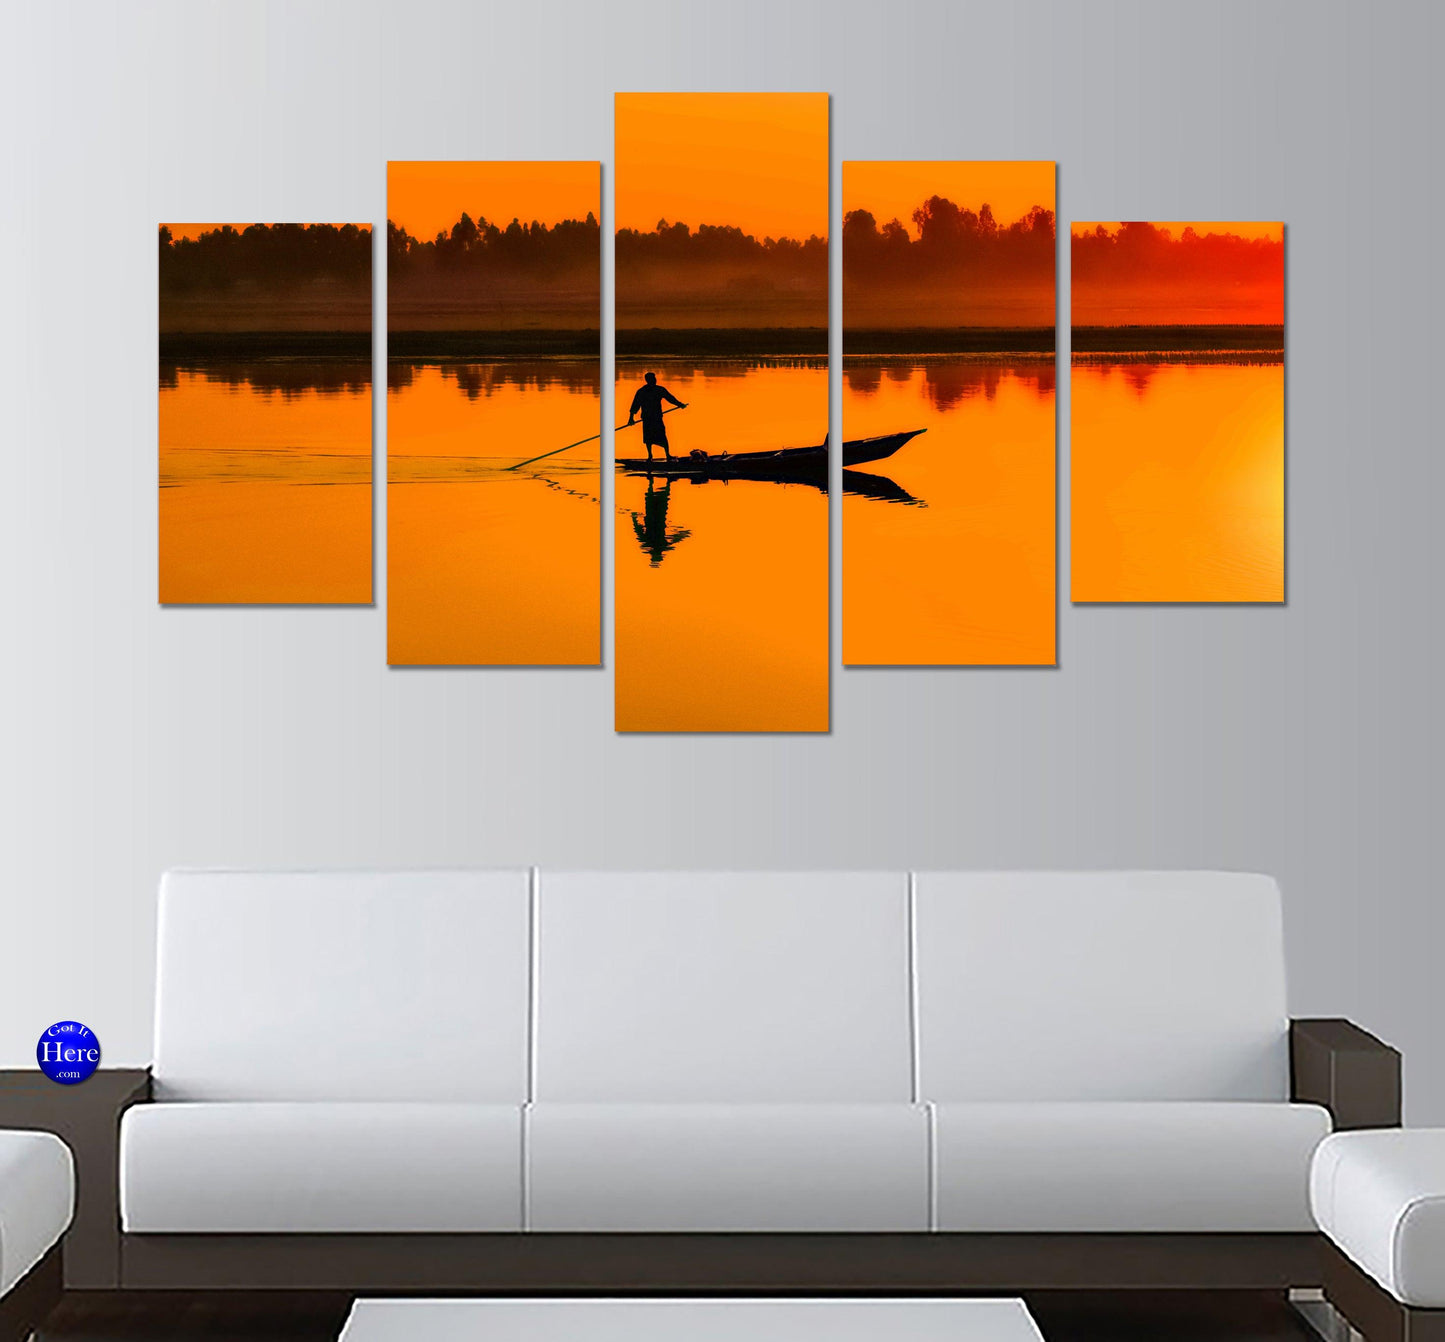 Fishing On Boat At Sunset On Lake 5 Panel Canvas Print Wall Art - GotItHere.com